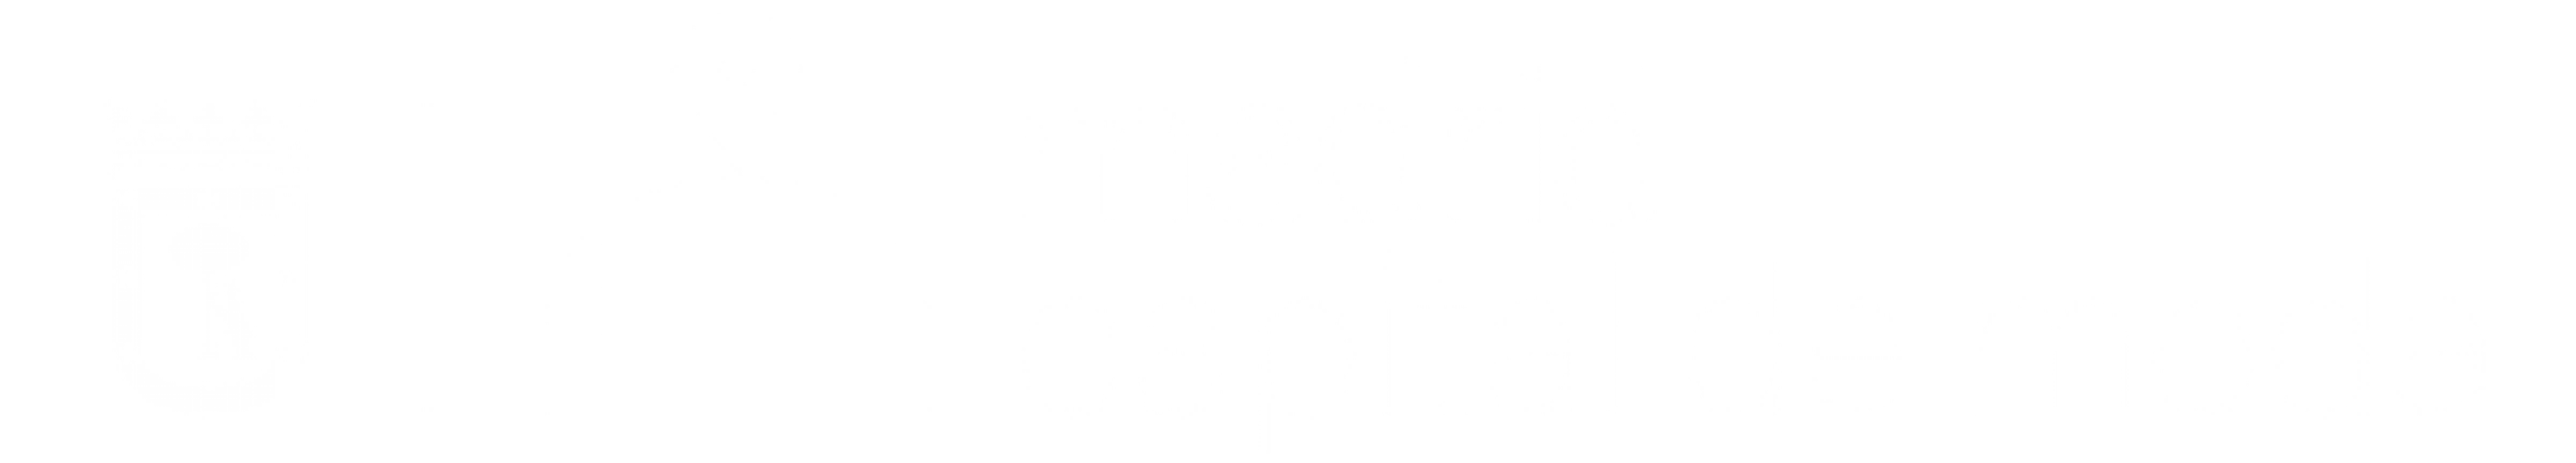 Madrid Capital de Moda